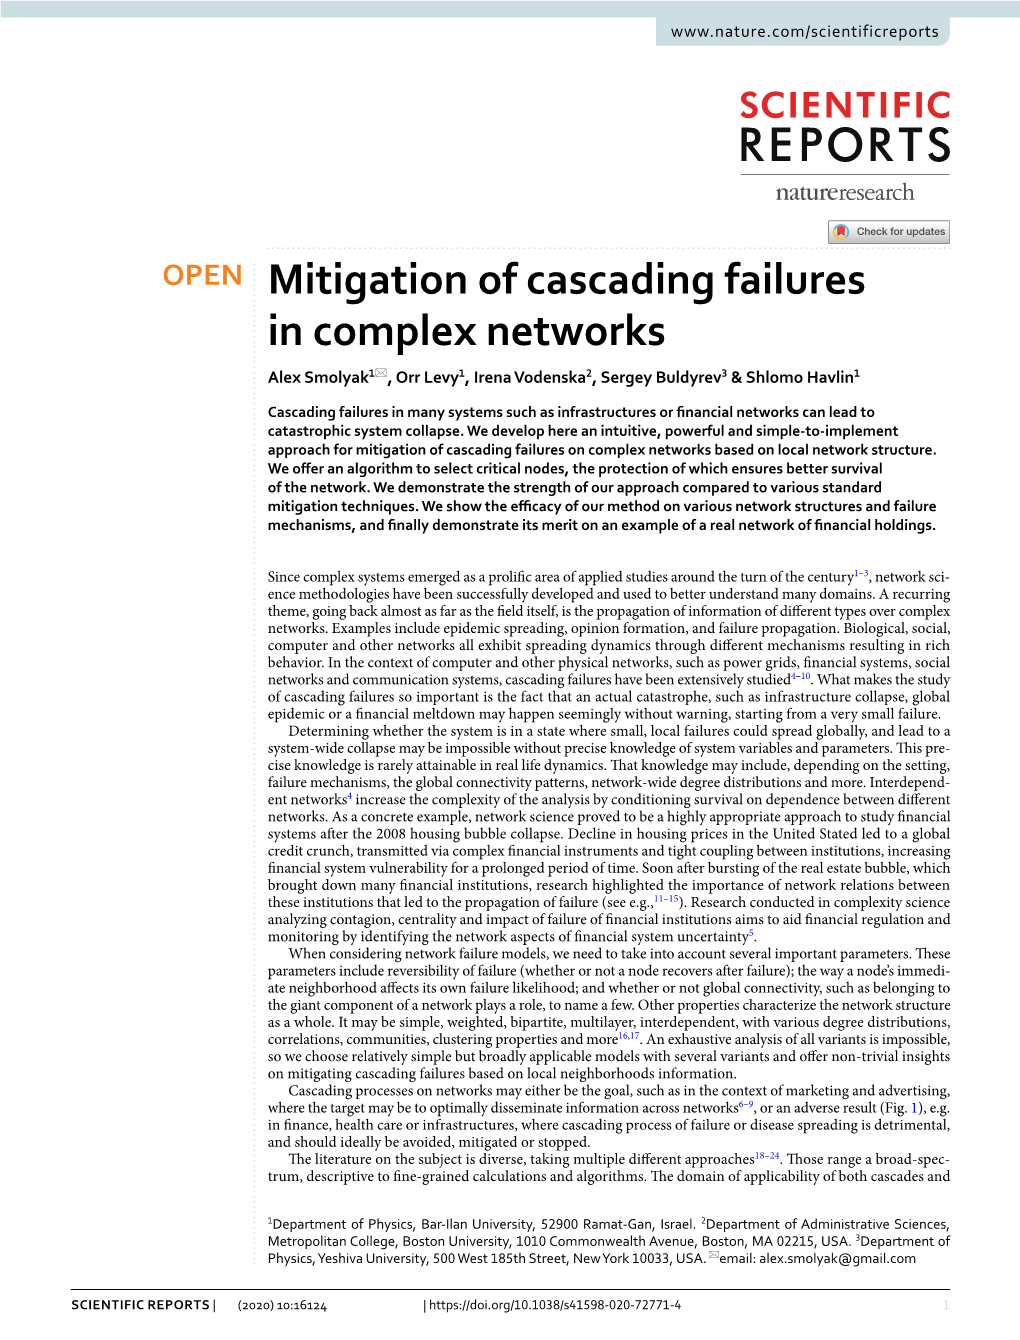 Mitigation of Cascading Failures in Complex Networks Alex Smolyak1*, Orr Levy1, Irena Vodenska2, Sergey Buldyrev3 & Shlomo Havlin1